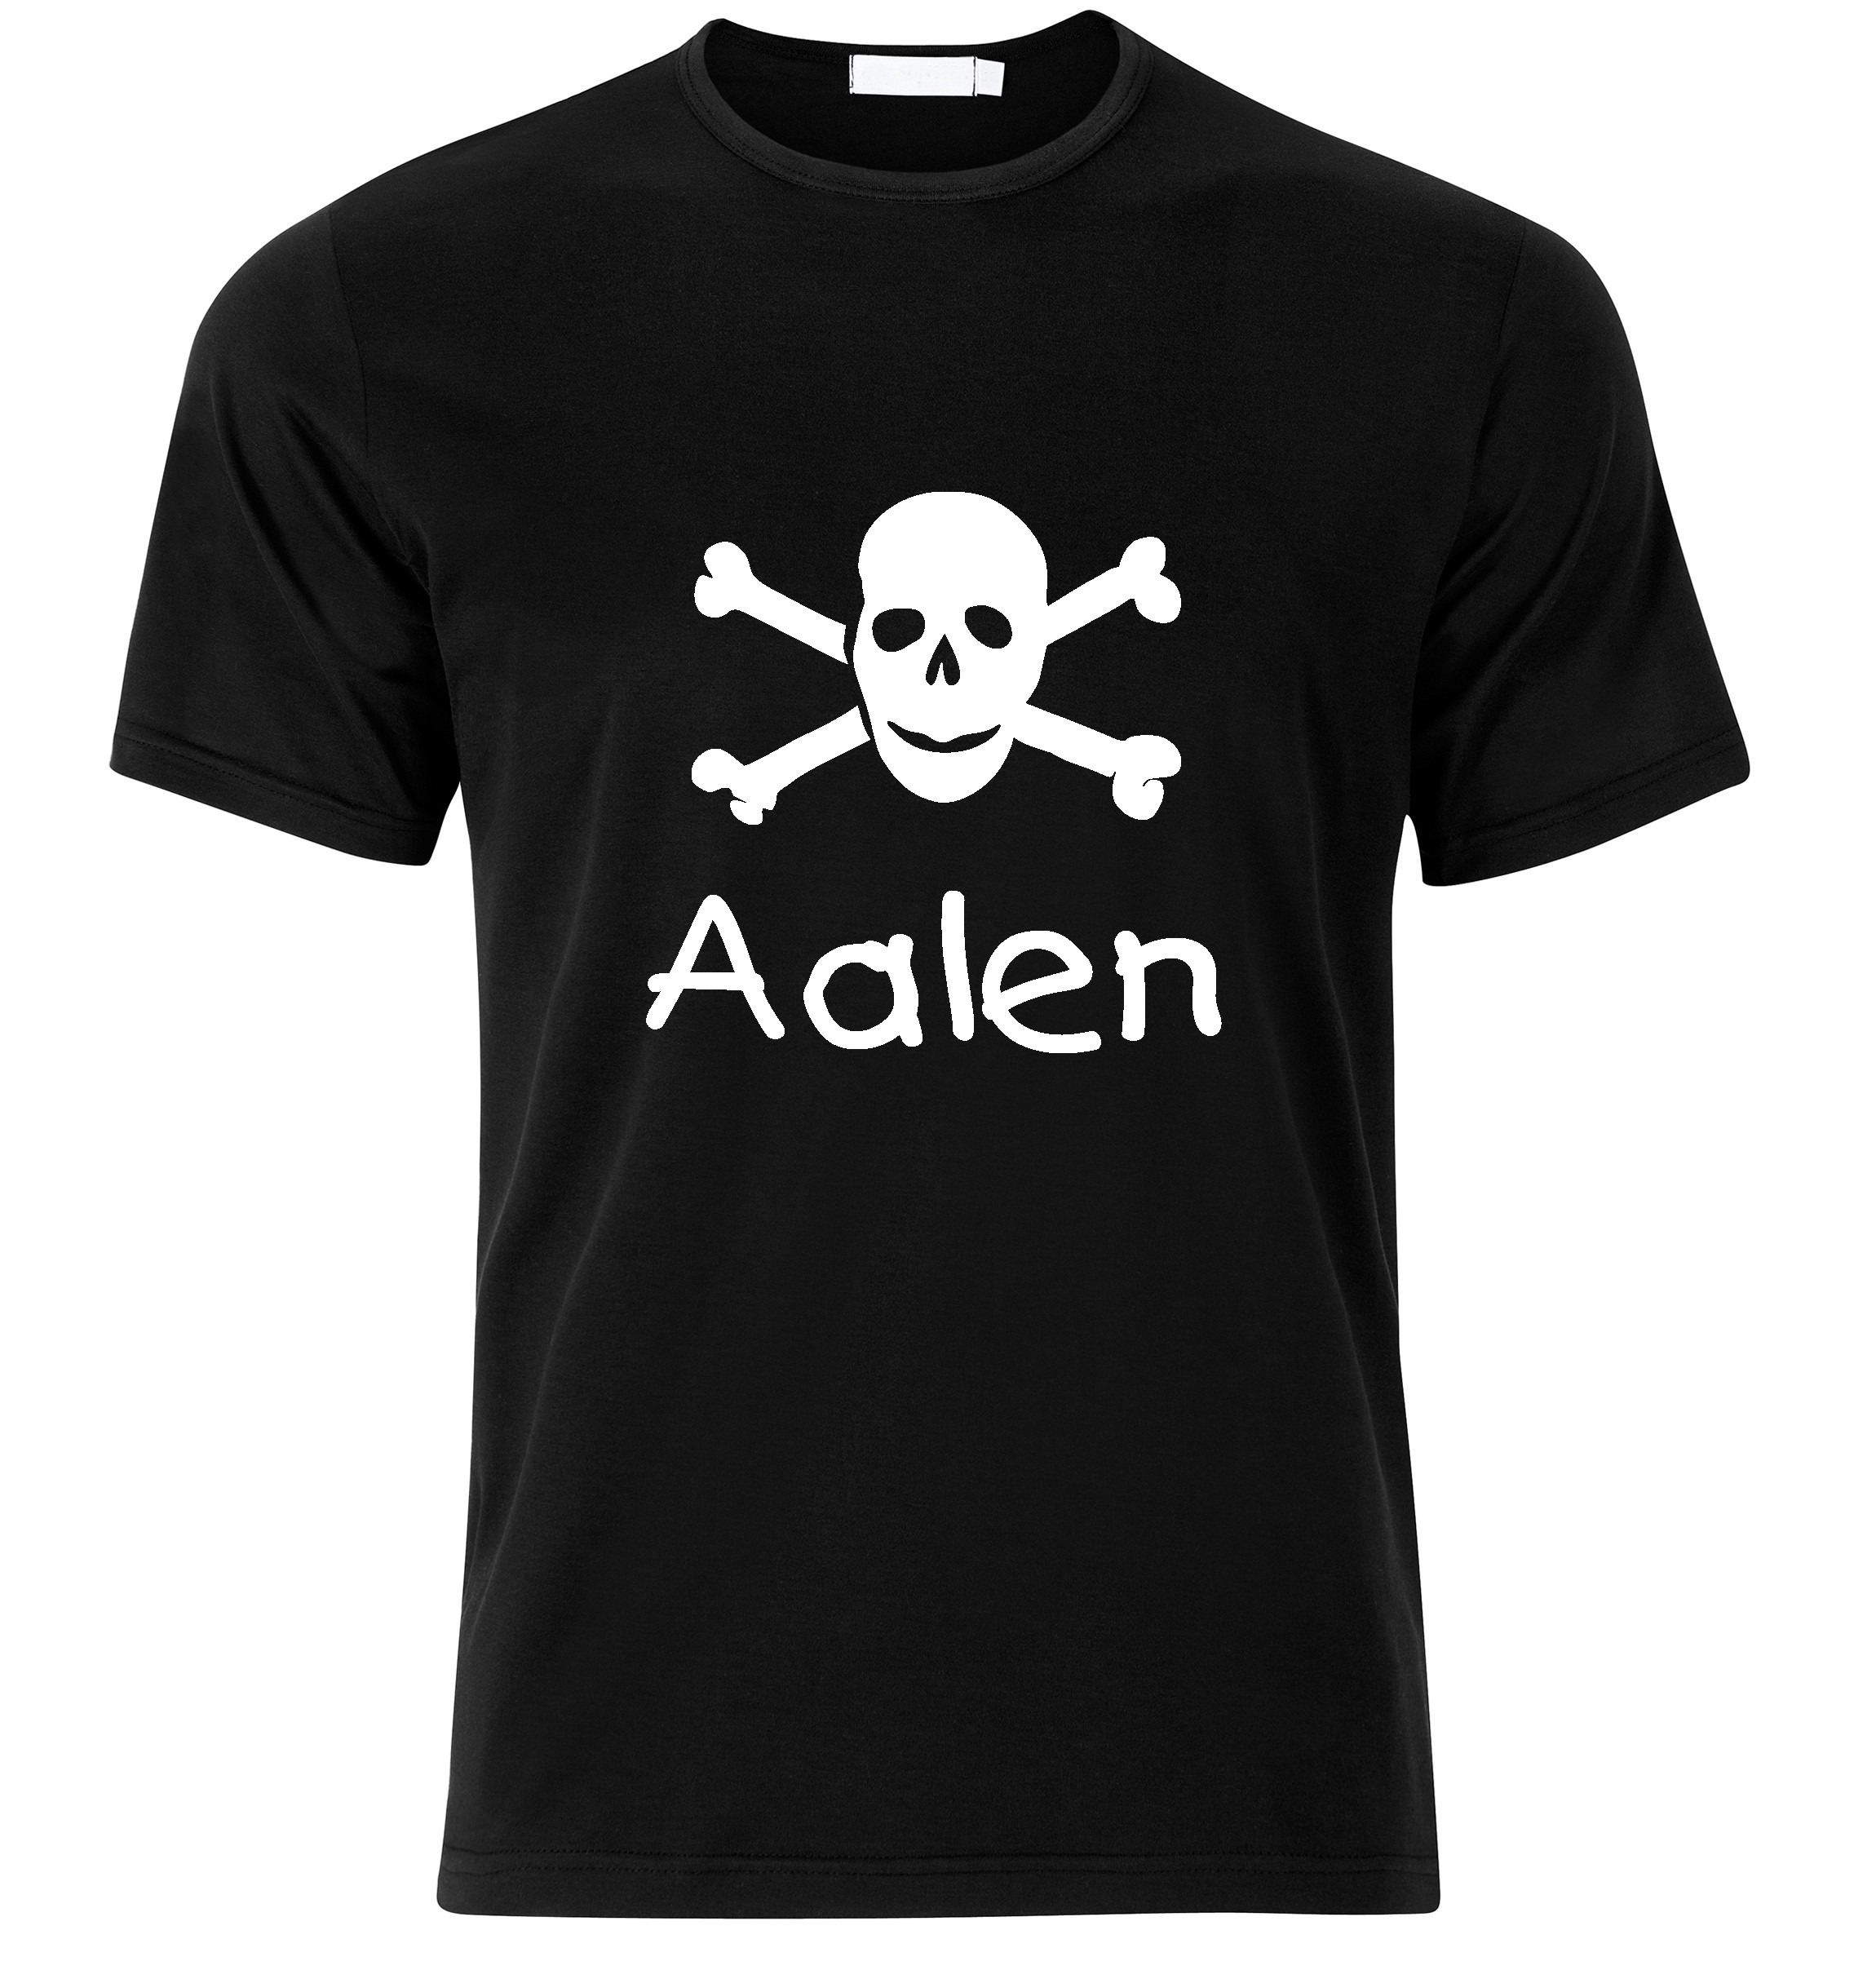 T-Shirt Aalen Jolly Roger, Totenkopf